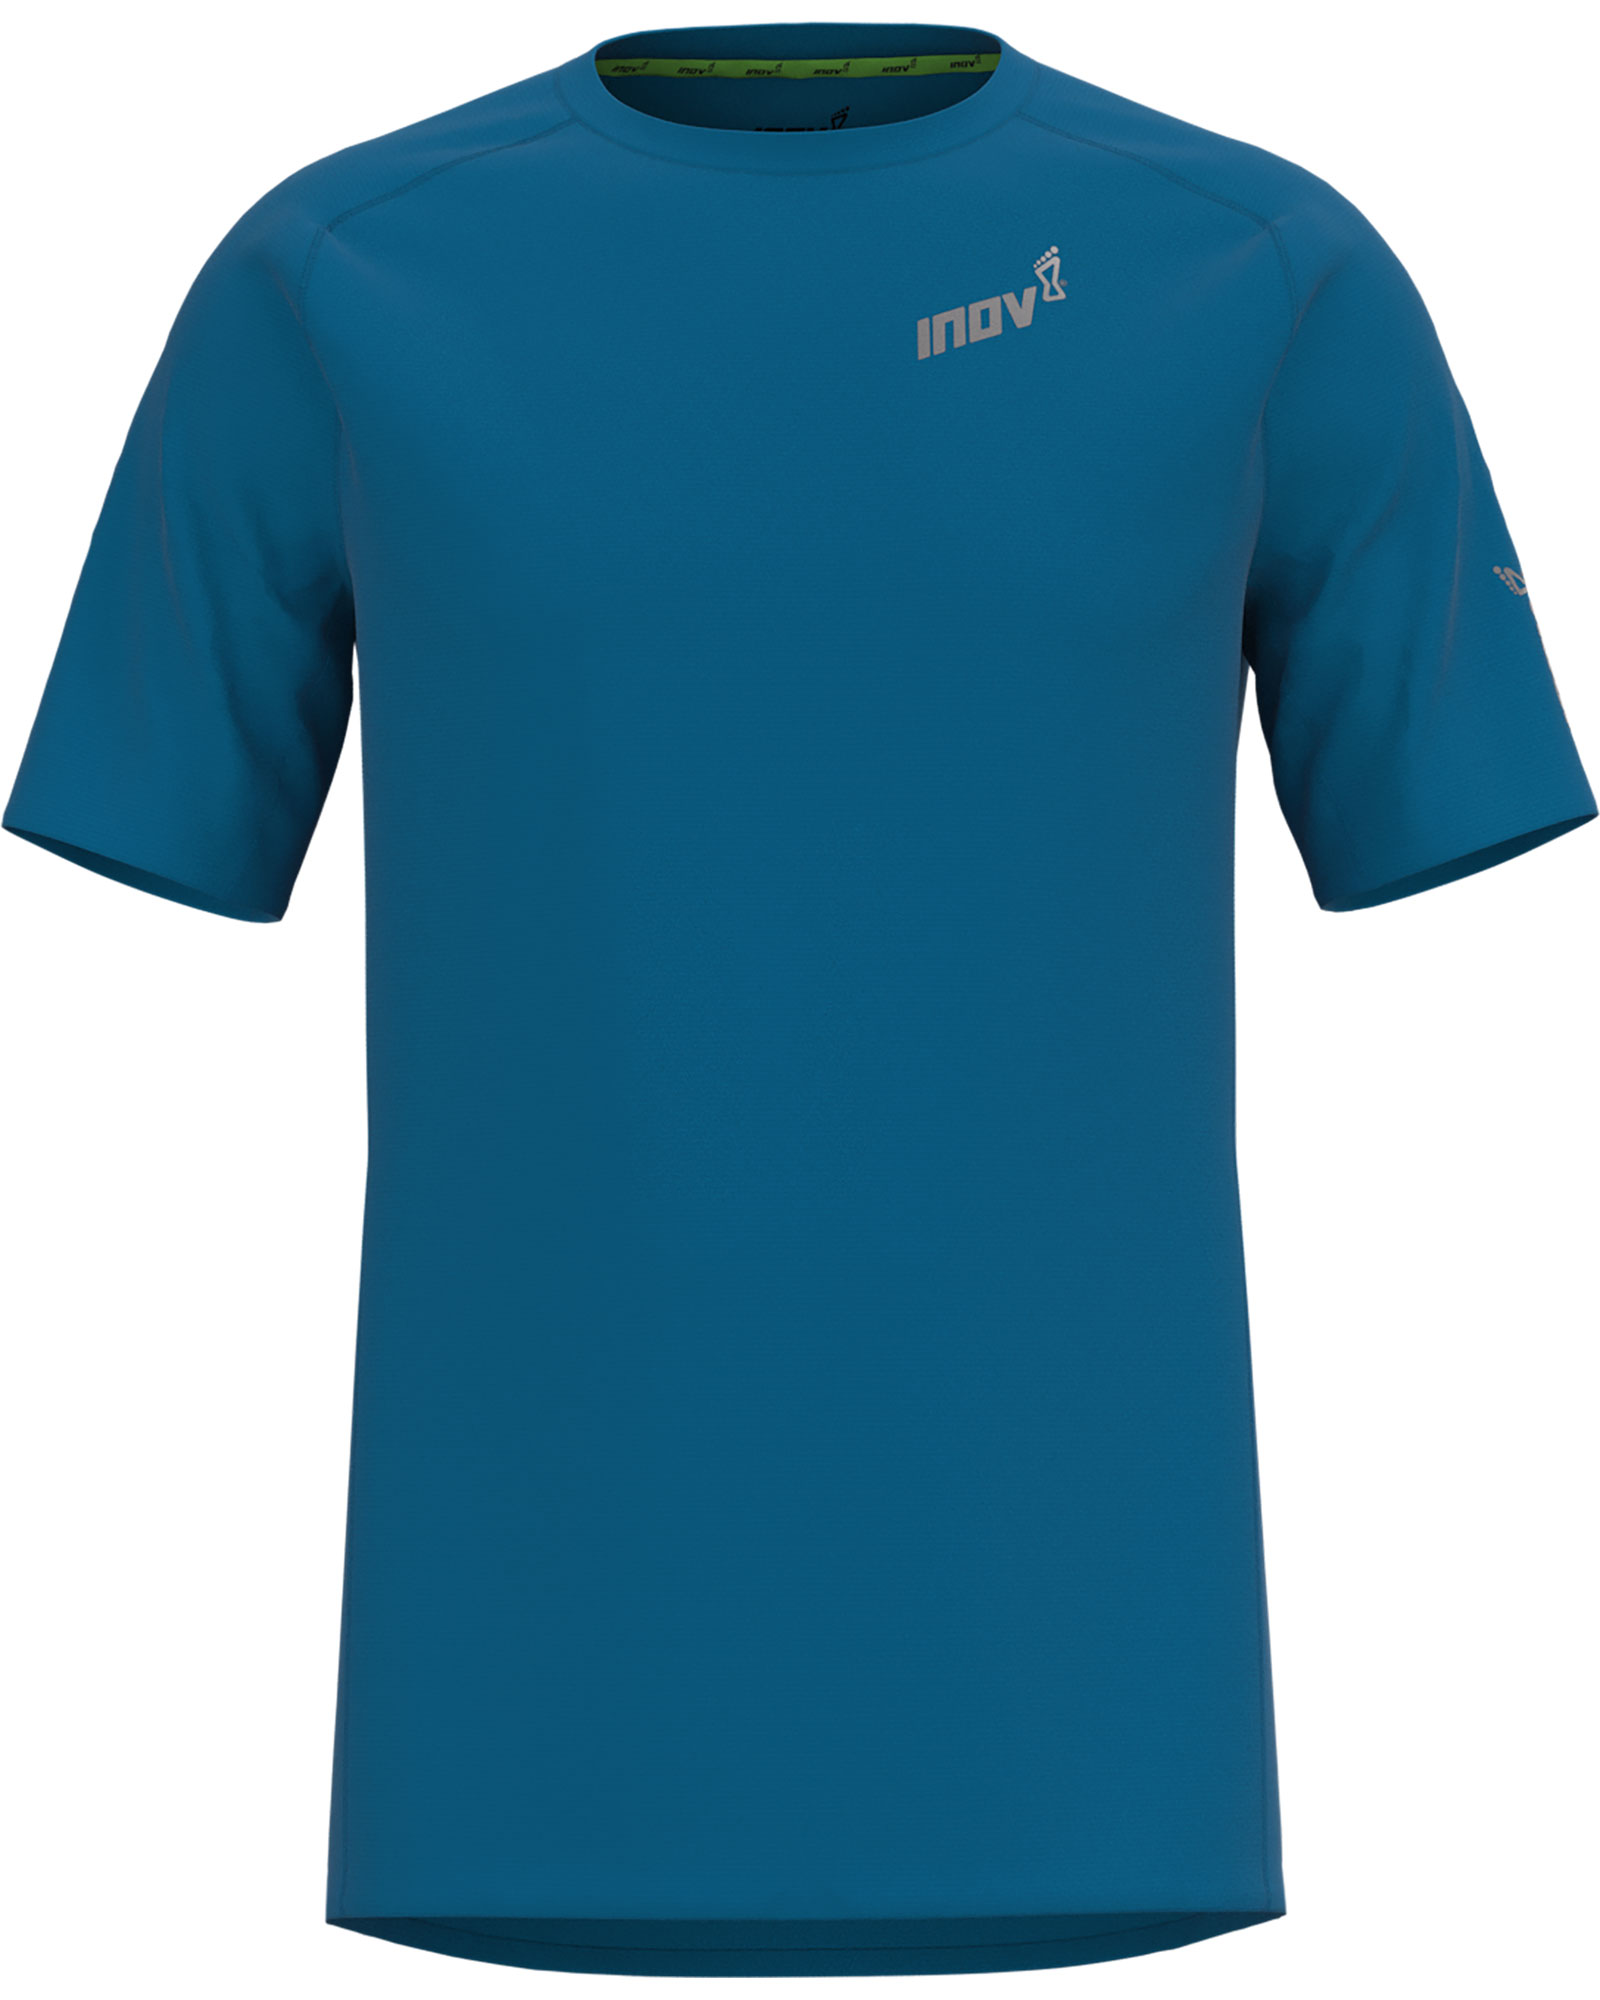 INOV8 Men's Base Elite T-Shirt